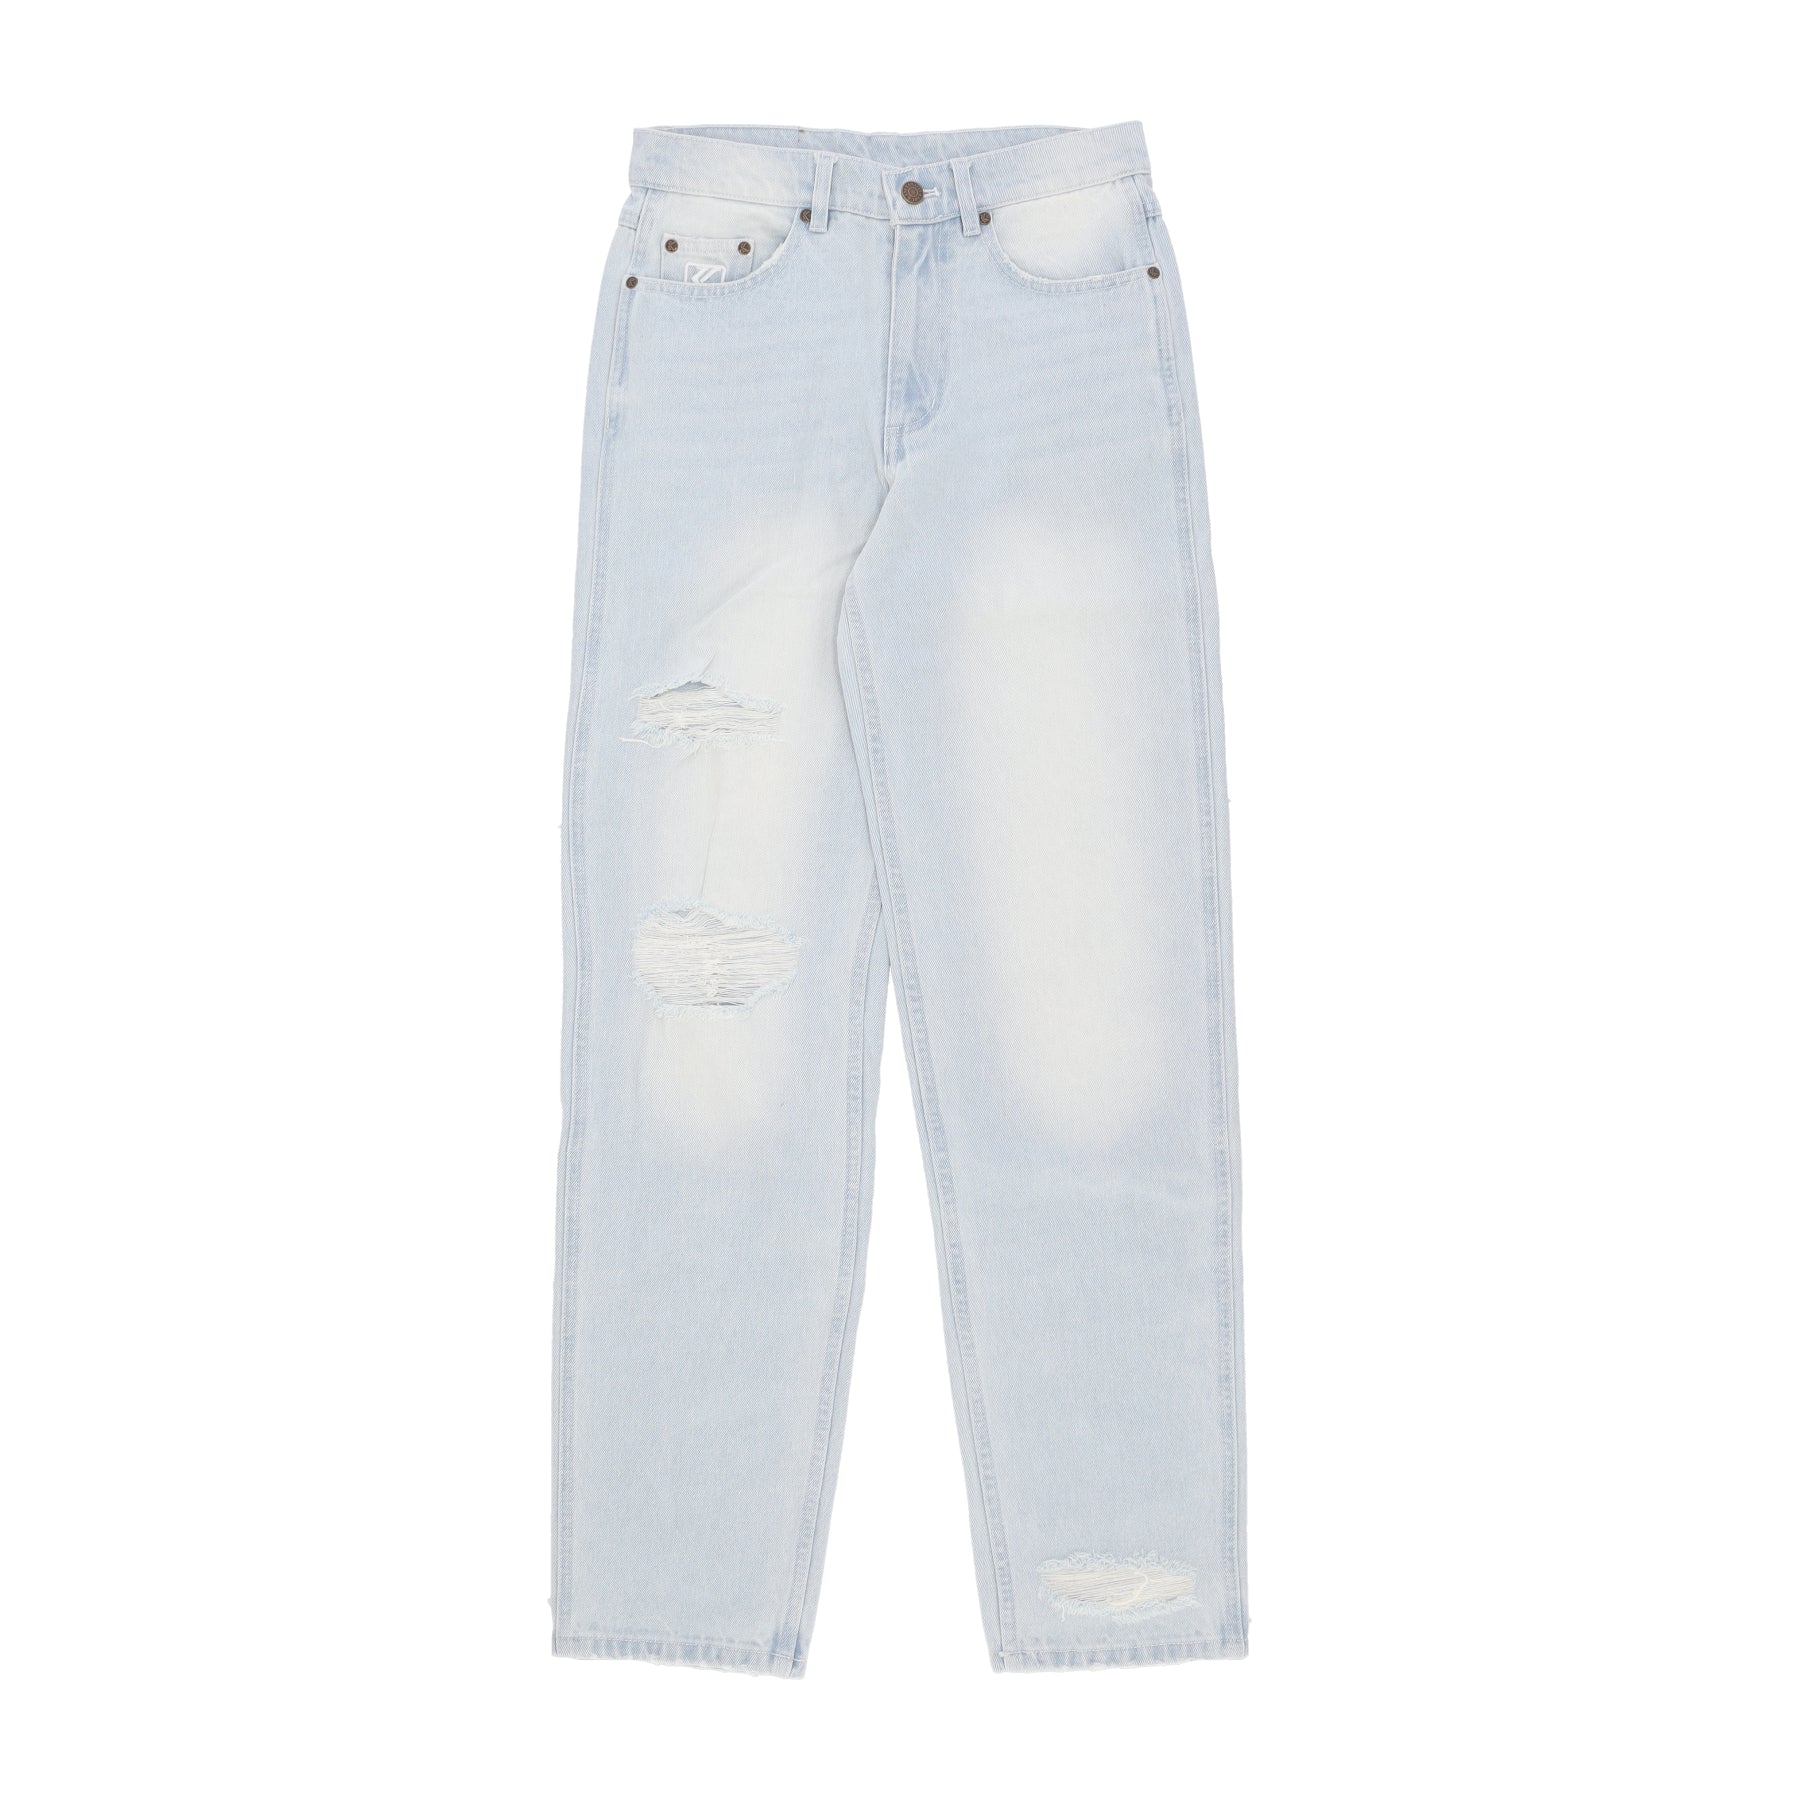 Jeans Uomo Baggy Five Pocket Heavy Distressed Denim Pant Light Blue 6000602